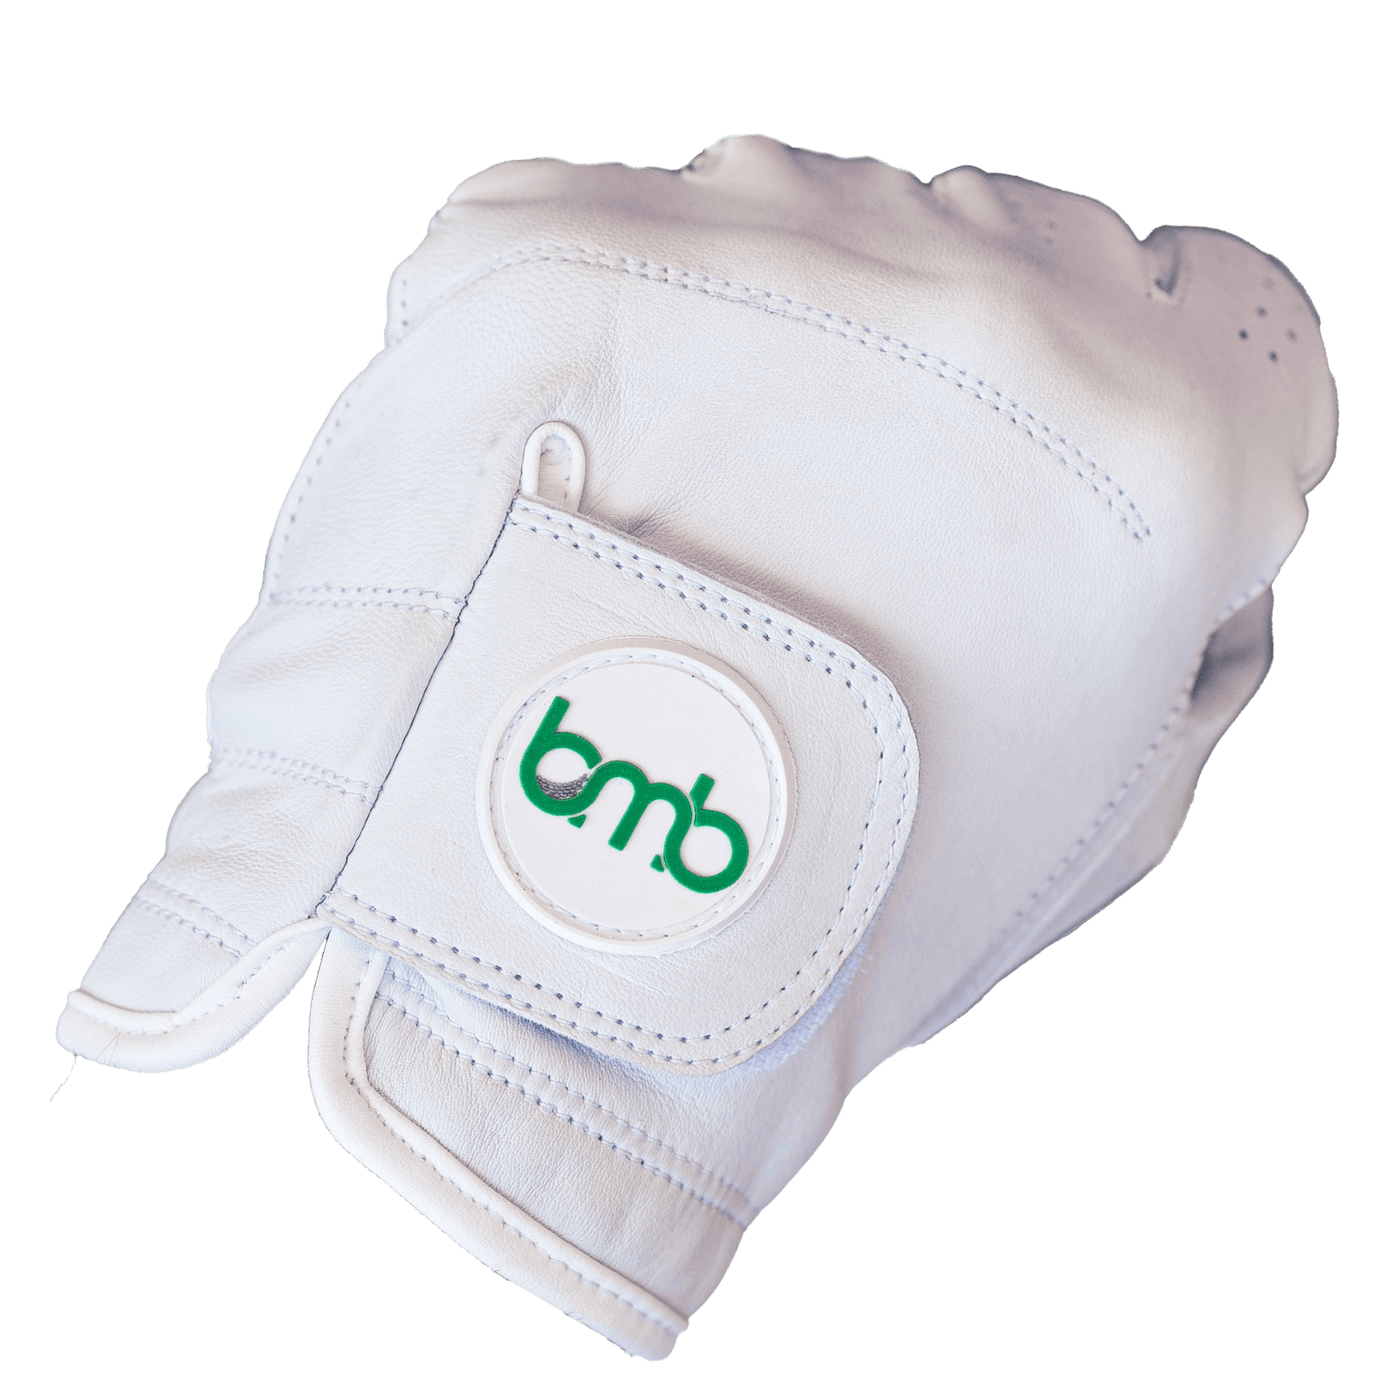 BMB Golf Glove